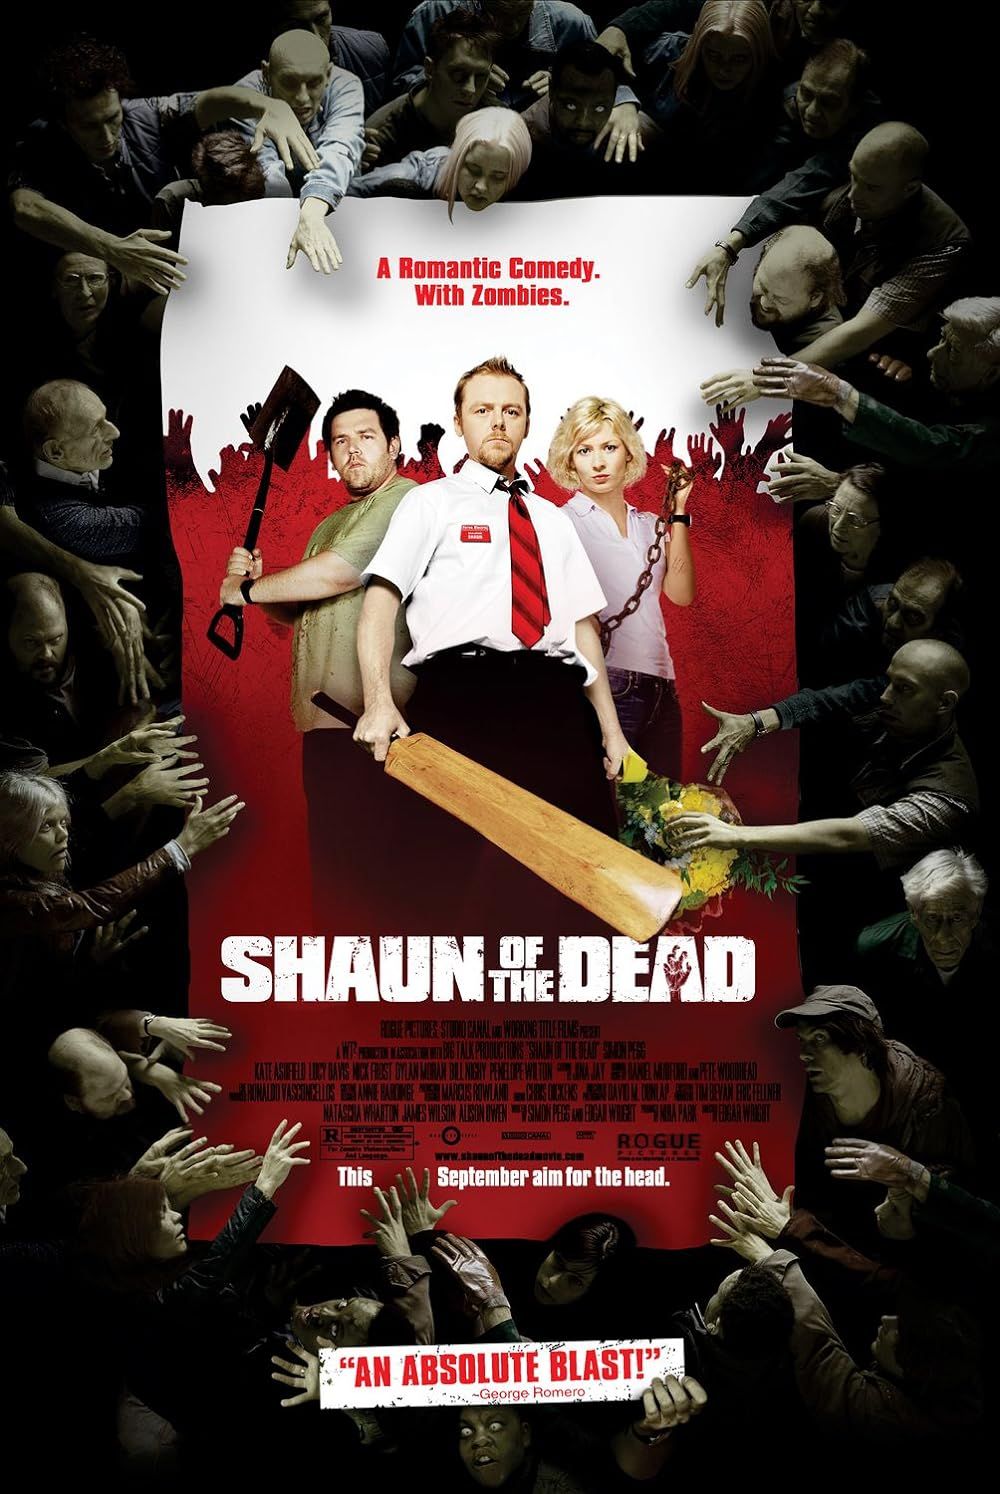 Kate Ashfield, Nick Frost i Simon Pegg pozują z bronią na plakacie Shaun of the Dead